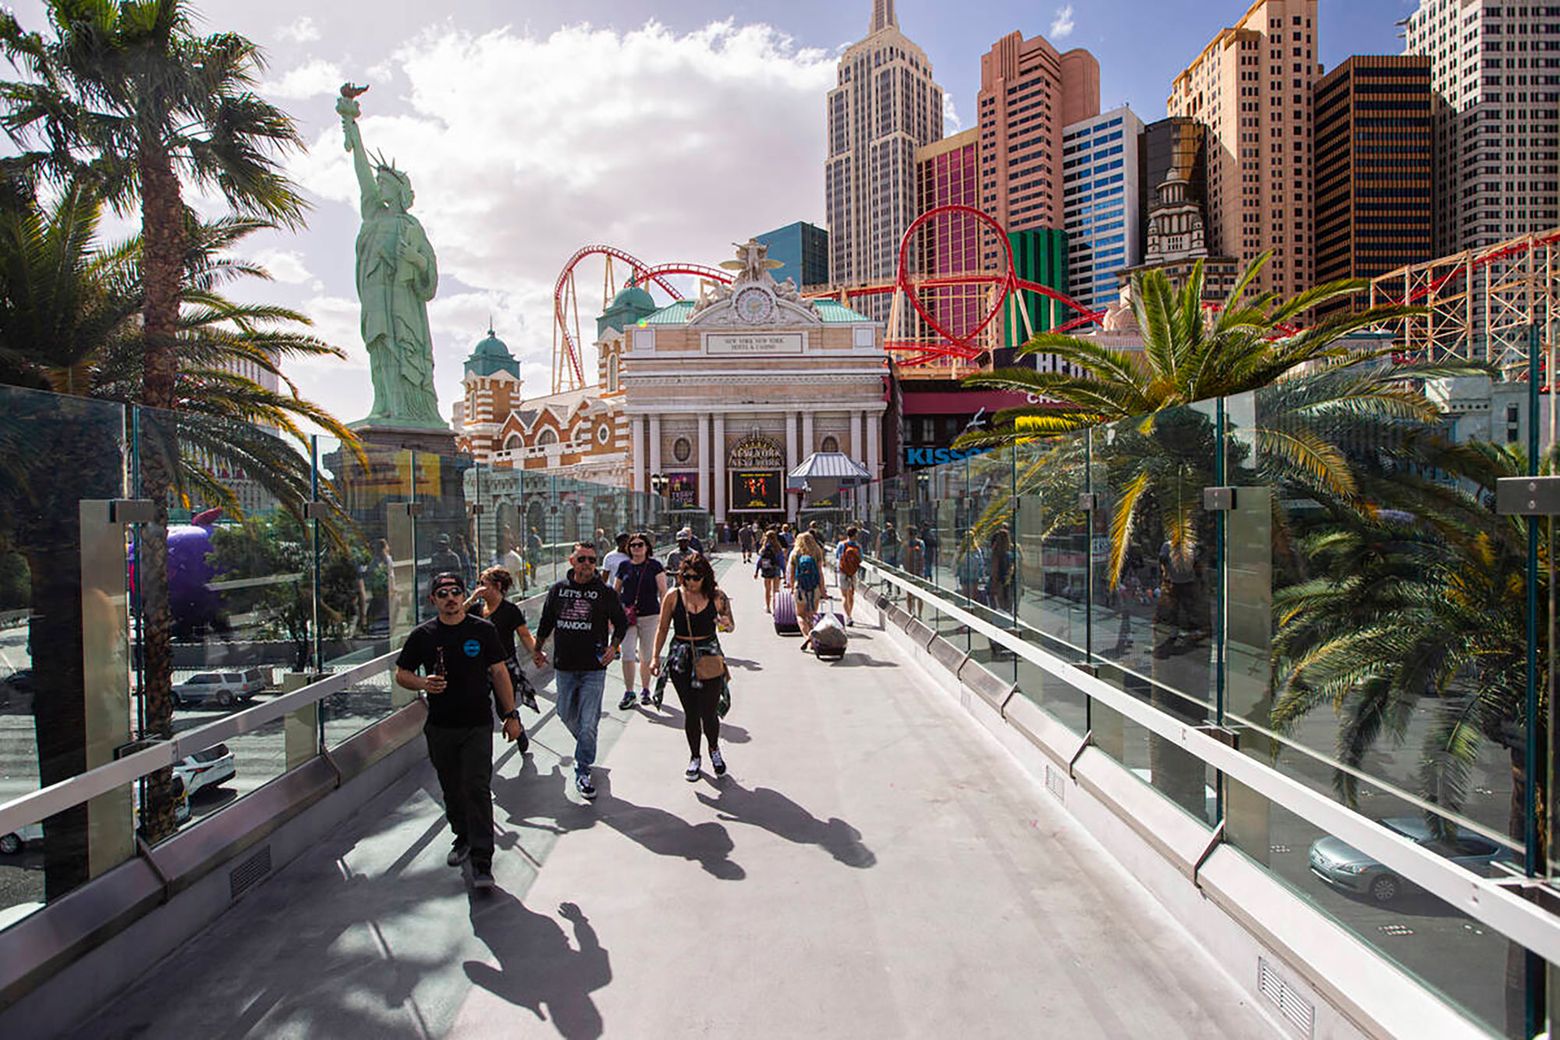 Stopping, standing on Las Vegas Strip pedestrian bridges banned